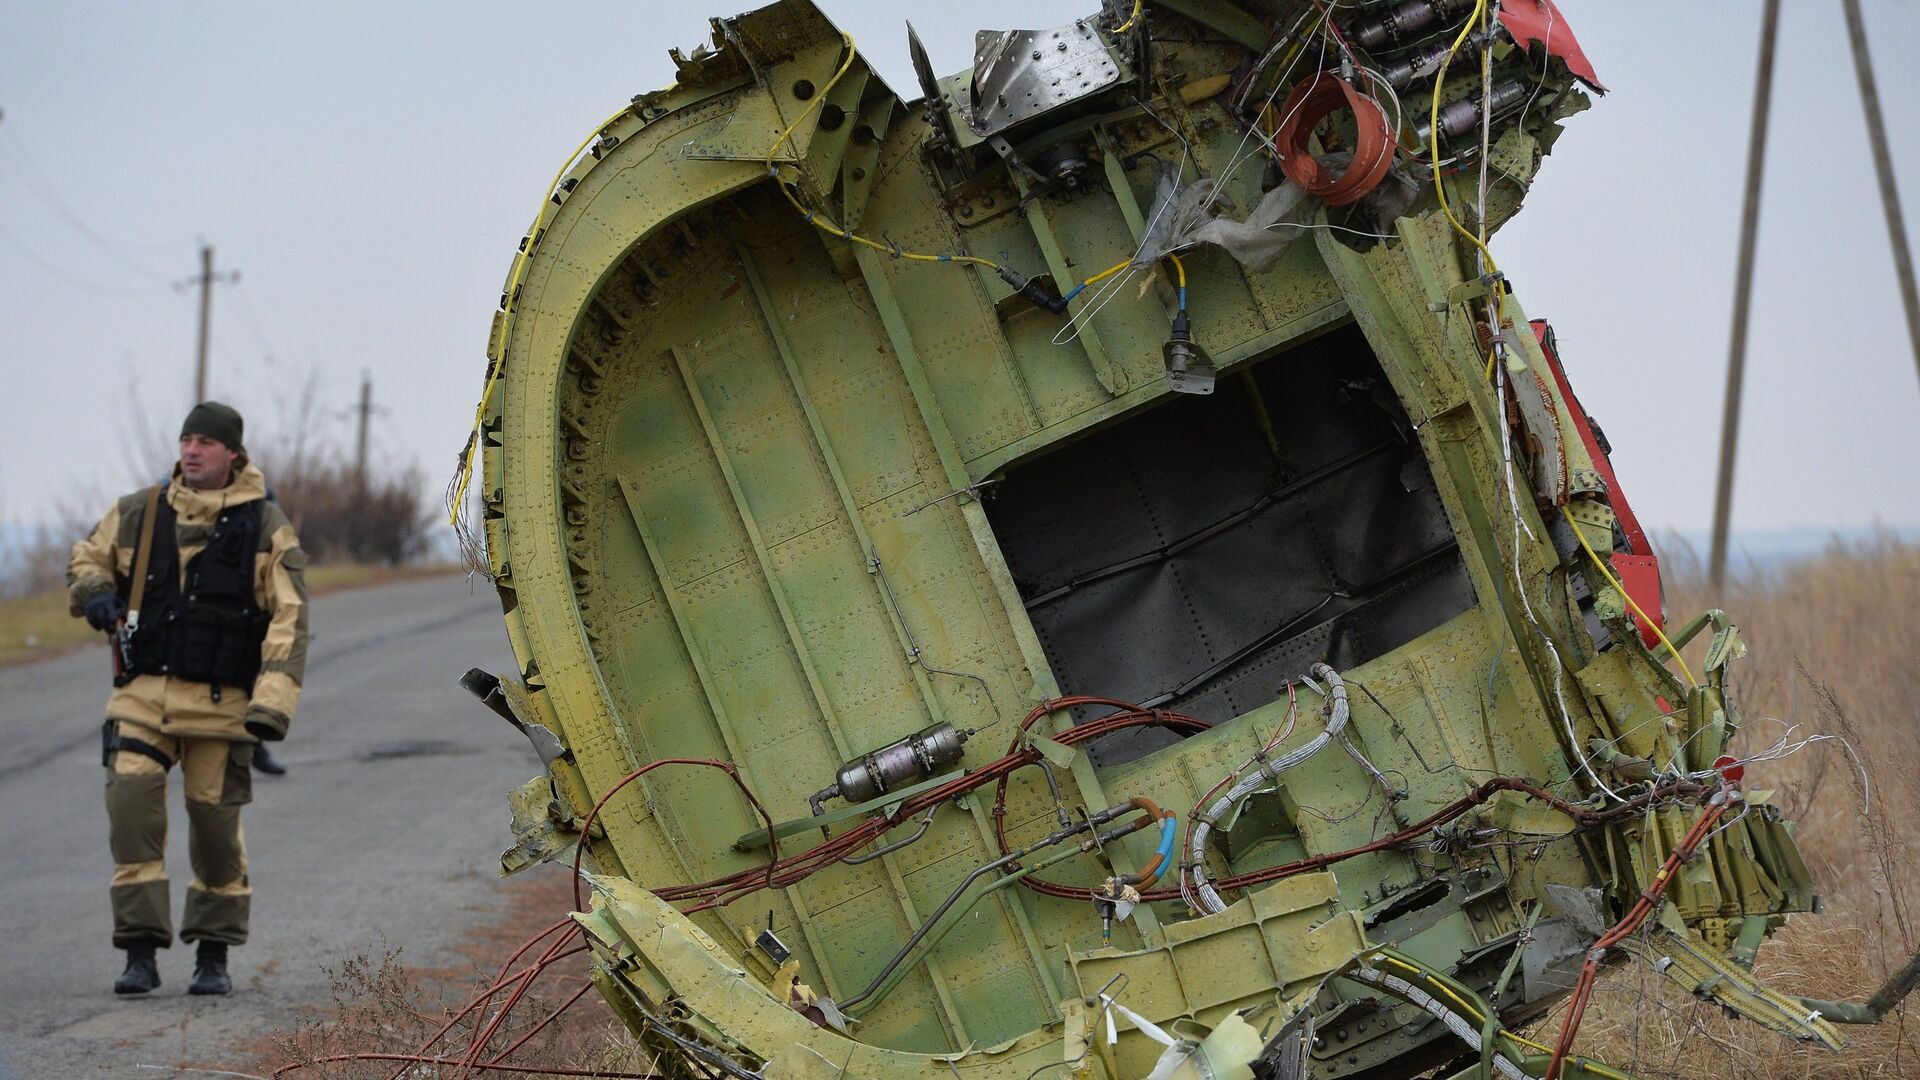 Dutch experts work at Malaysia Airlines Flight MH17 crash site - Sputnik International, 1920, 07.09.2021